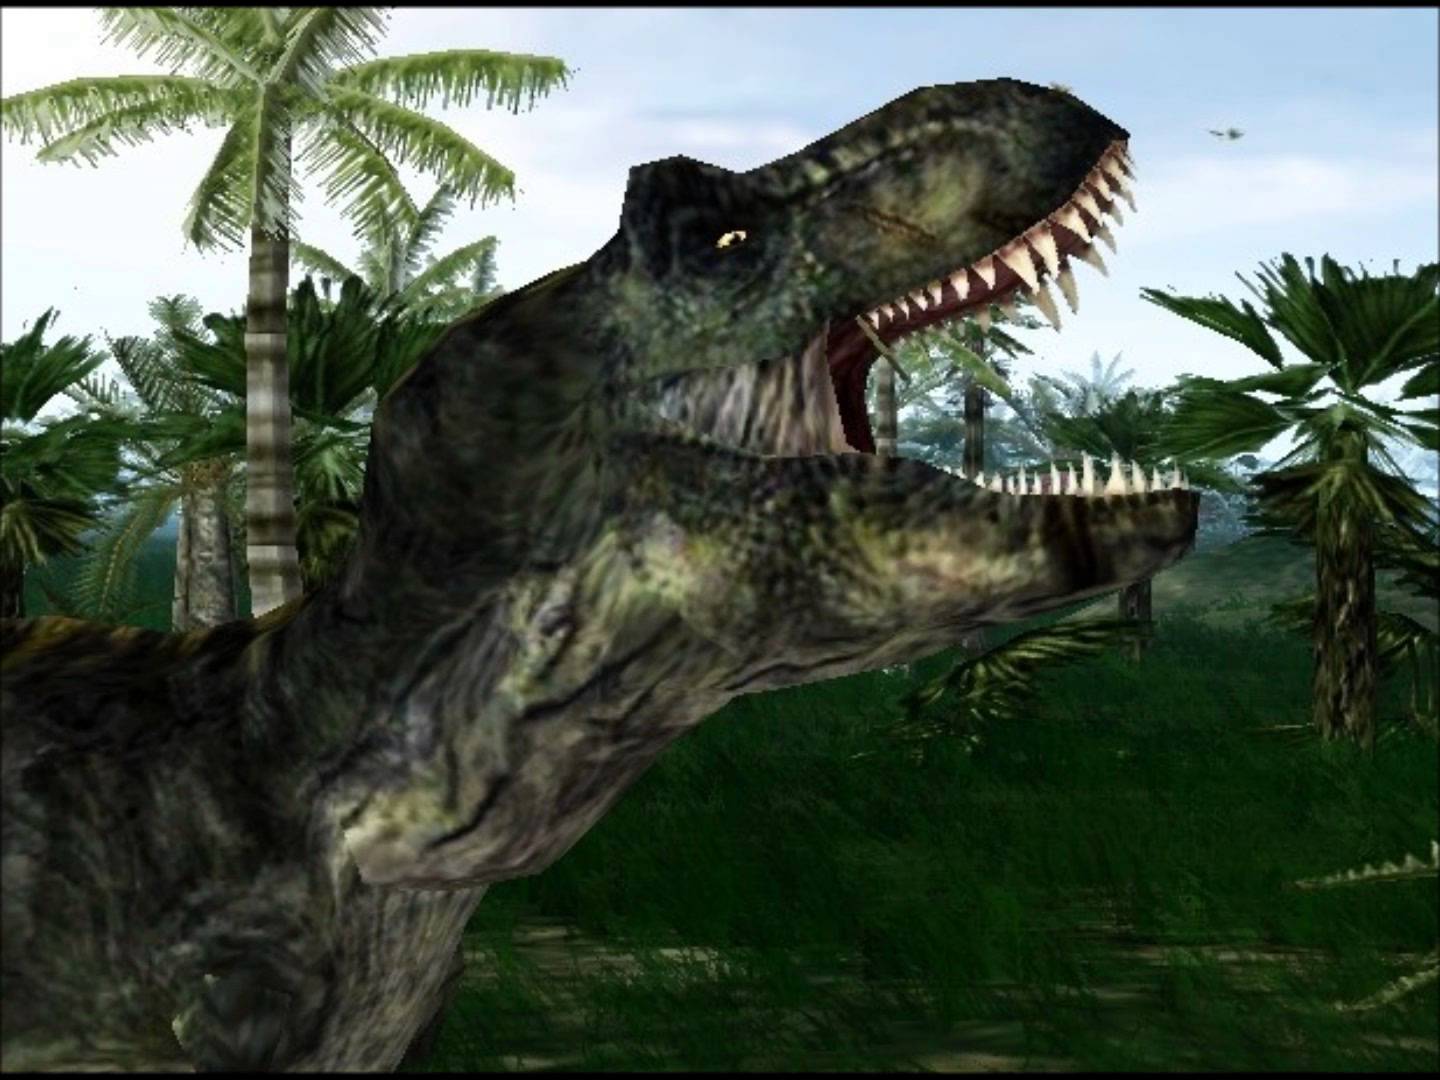 Jurassic park operation genesis full game pc